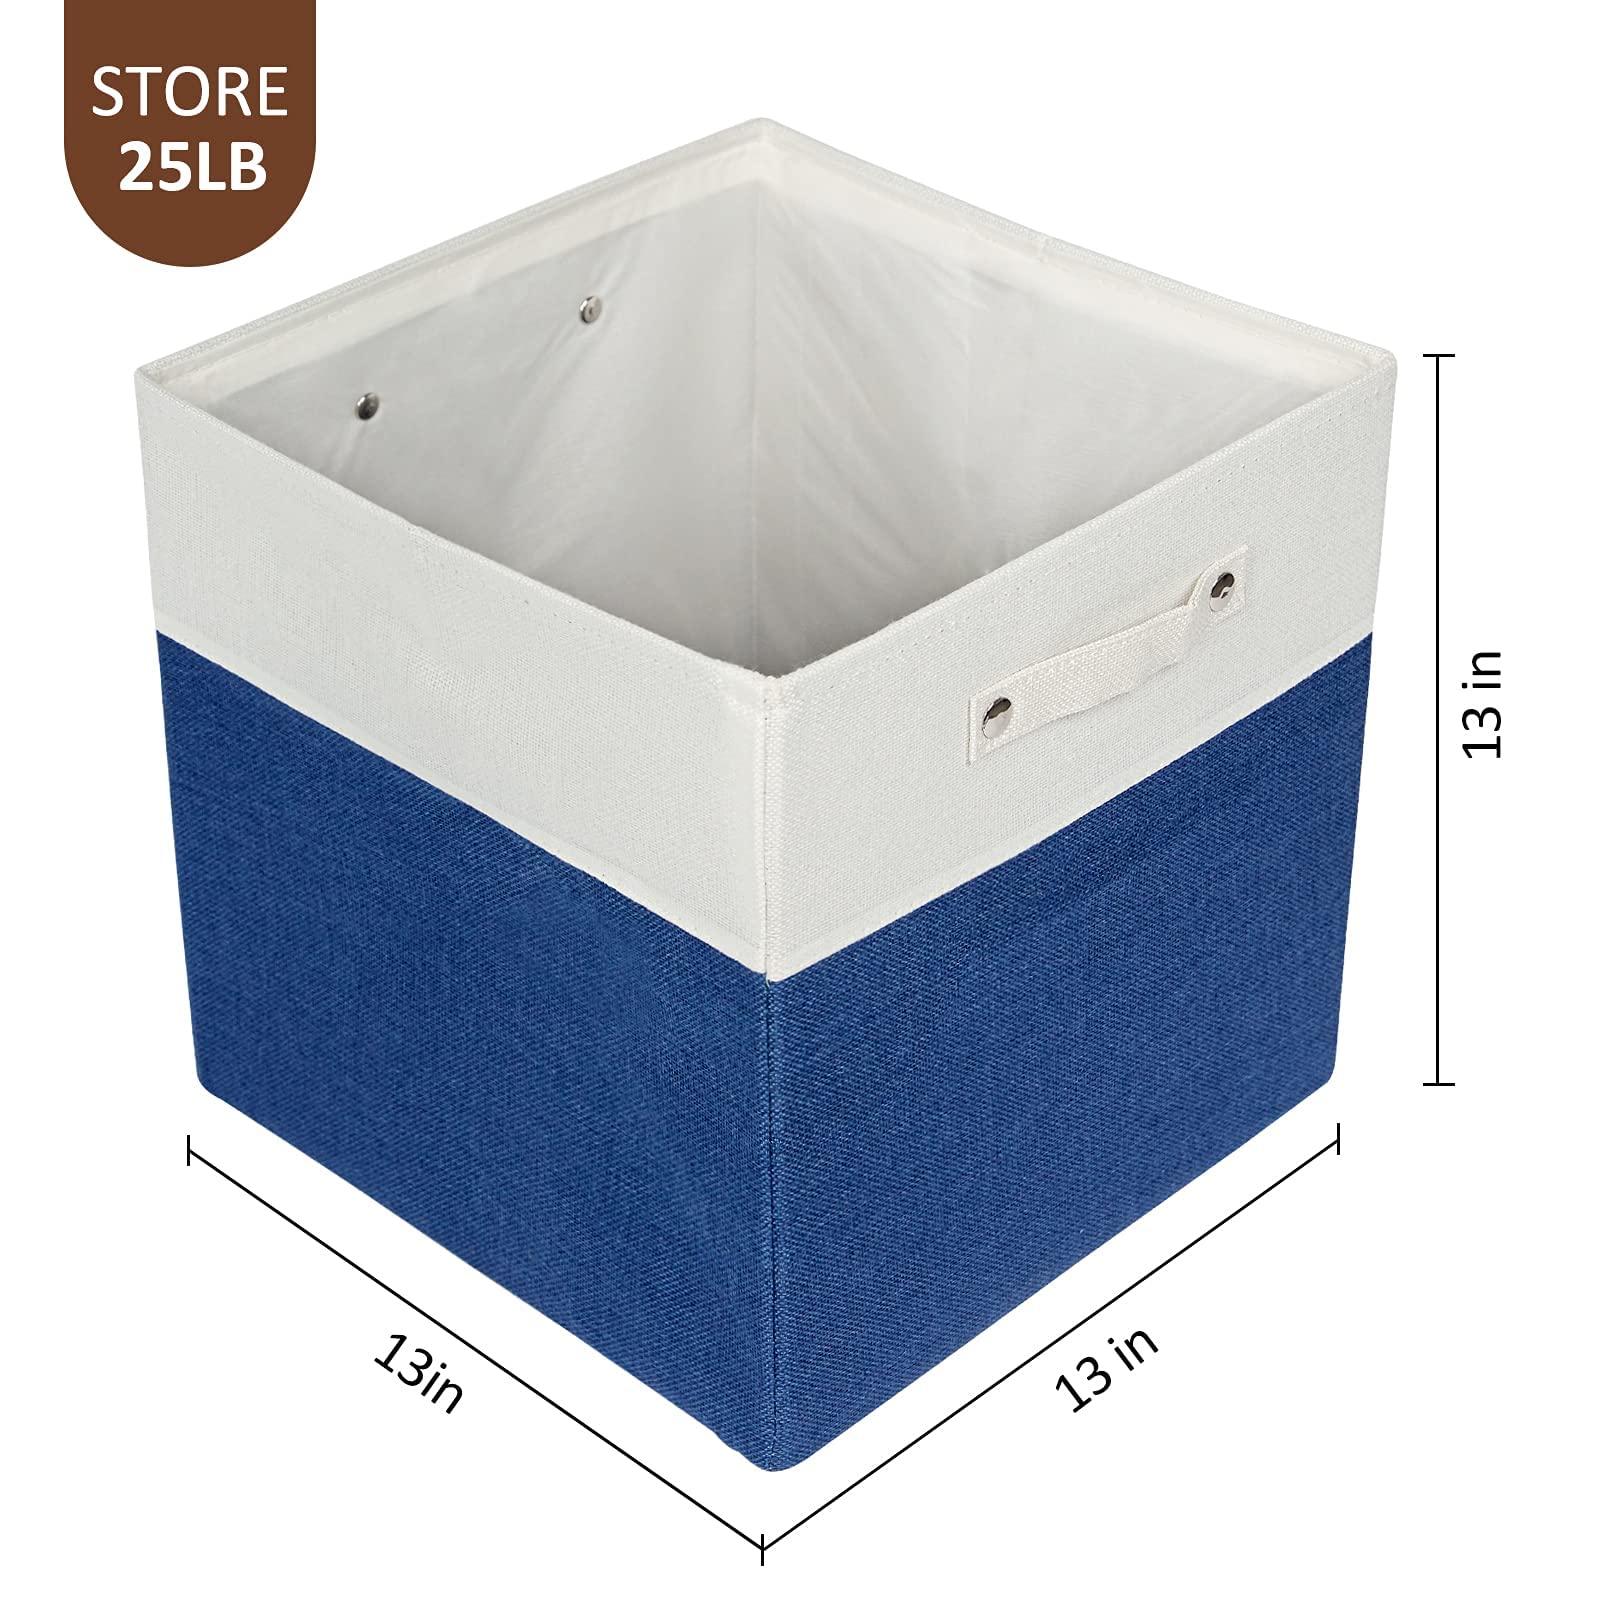 FinishingBo 13x13x13 Cube Storage Bins, Collapsible Fabric Storage Cubes Organizer , Foldable Large Storage Baskets for Nursery, Toys Organizing Closet, Shelf Cabinet（6Pack, White and Navy Blue